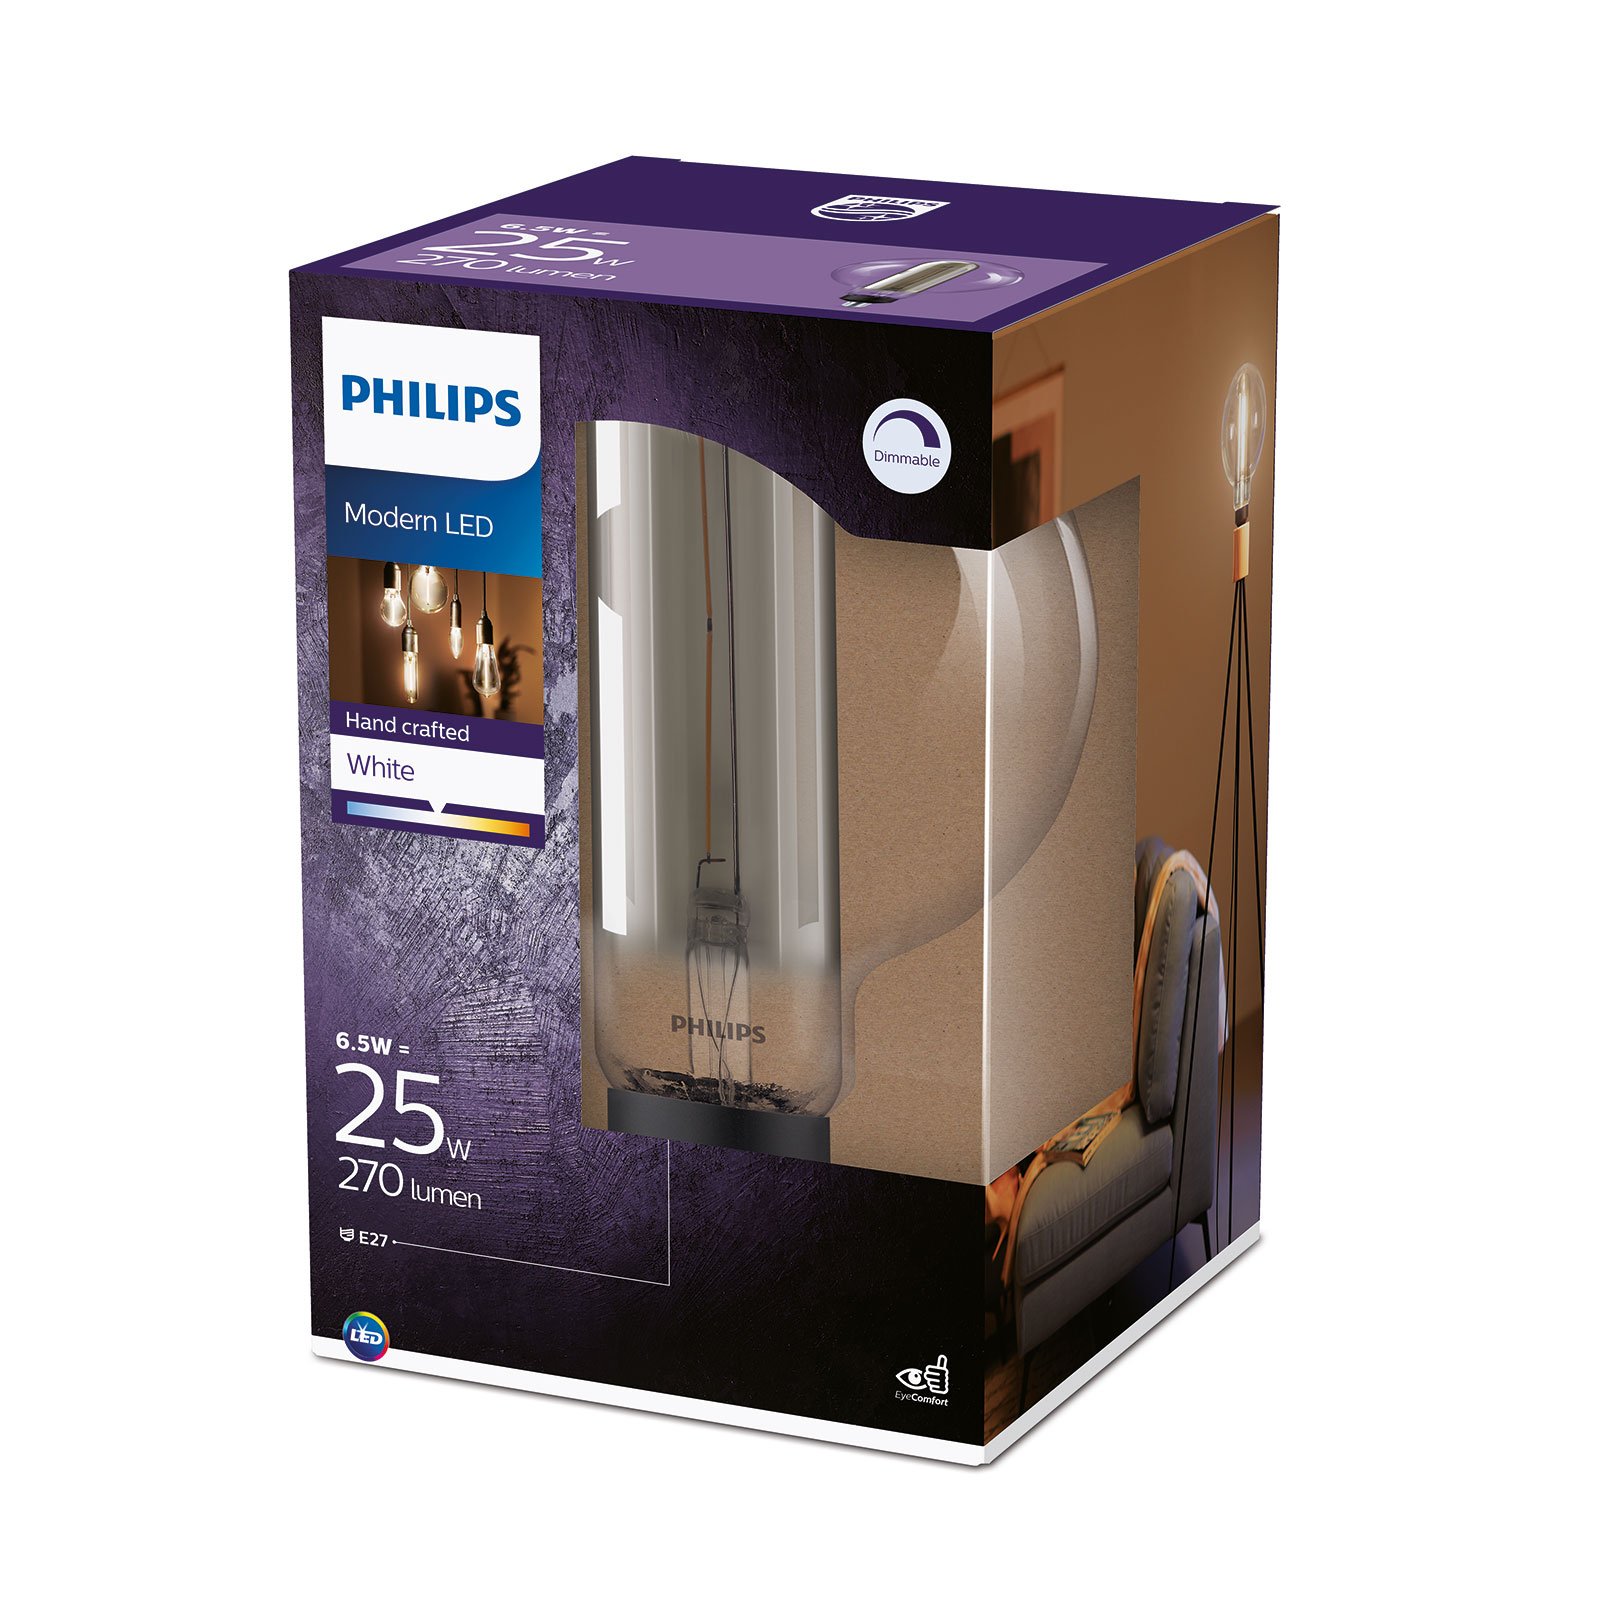 Philips Giant Globe rook LED lamp E27 6.5W